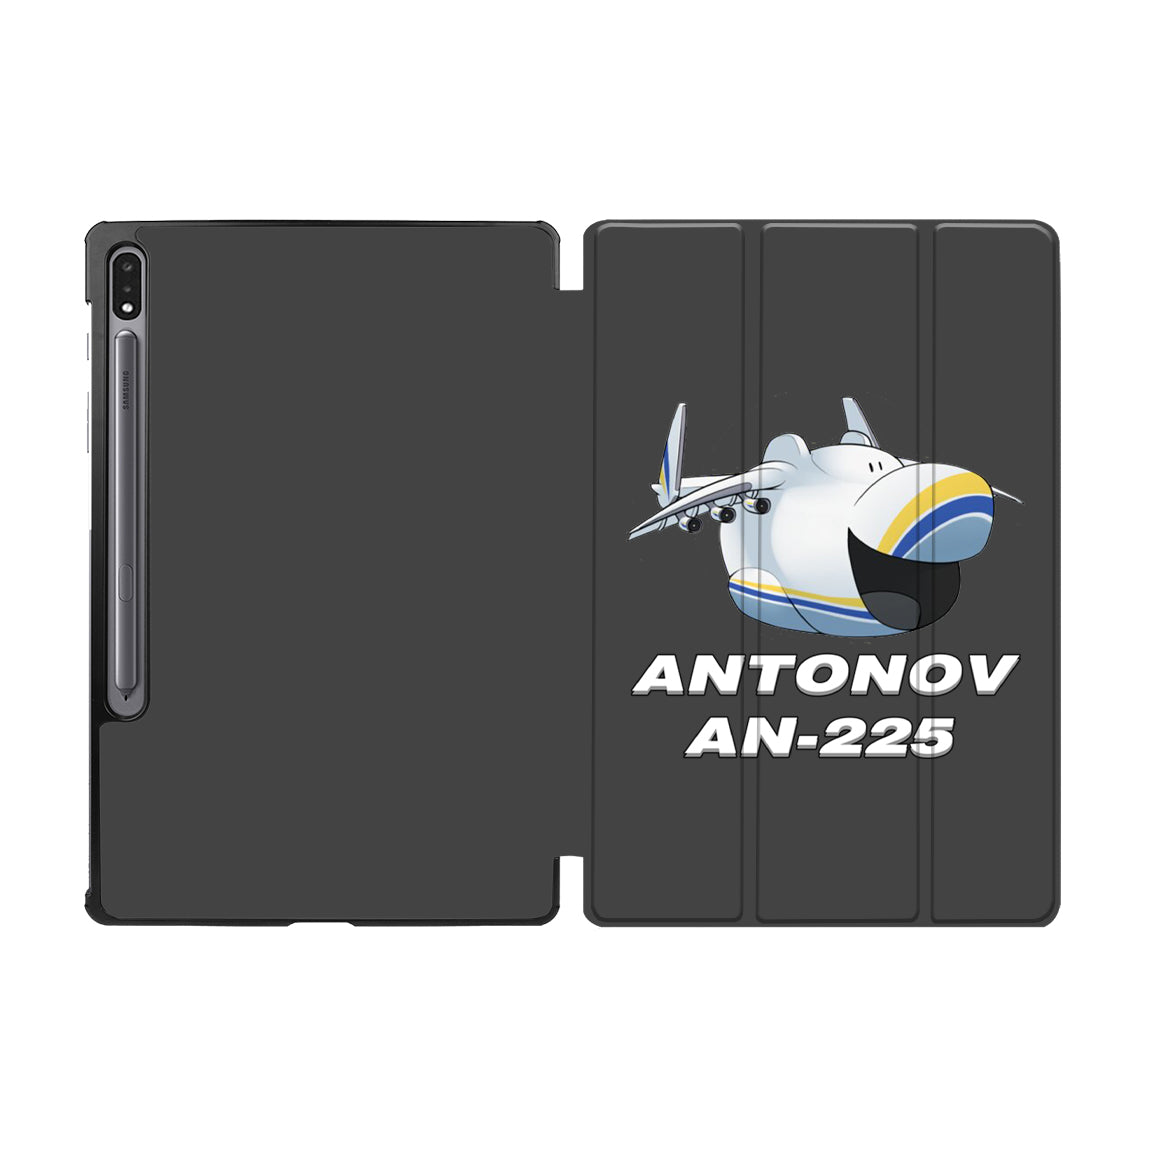 Antonov AN-225 (23) Designed Samsung Tablet Cases